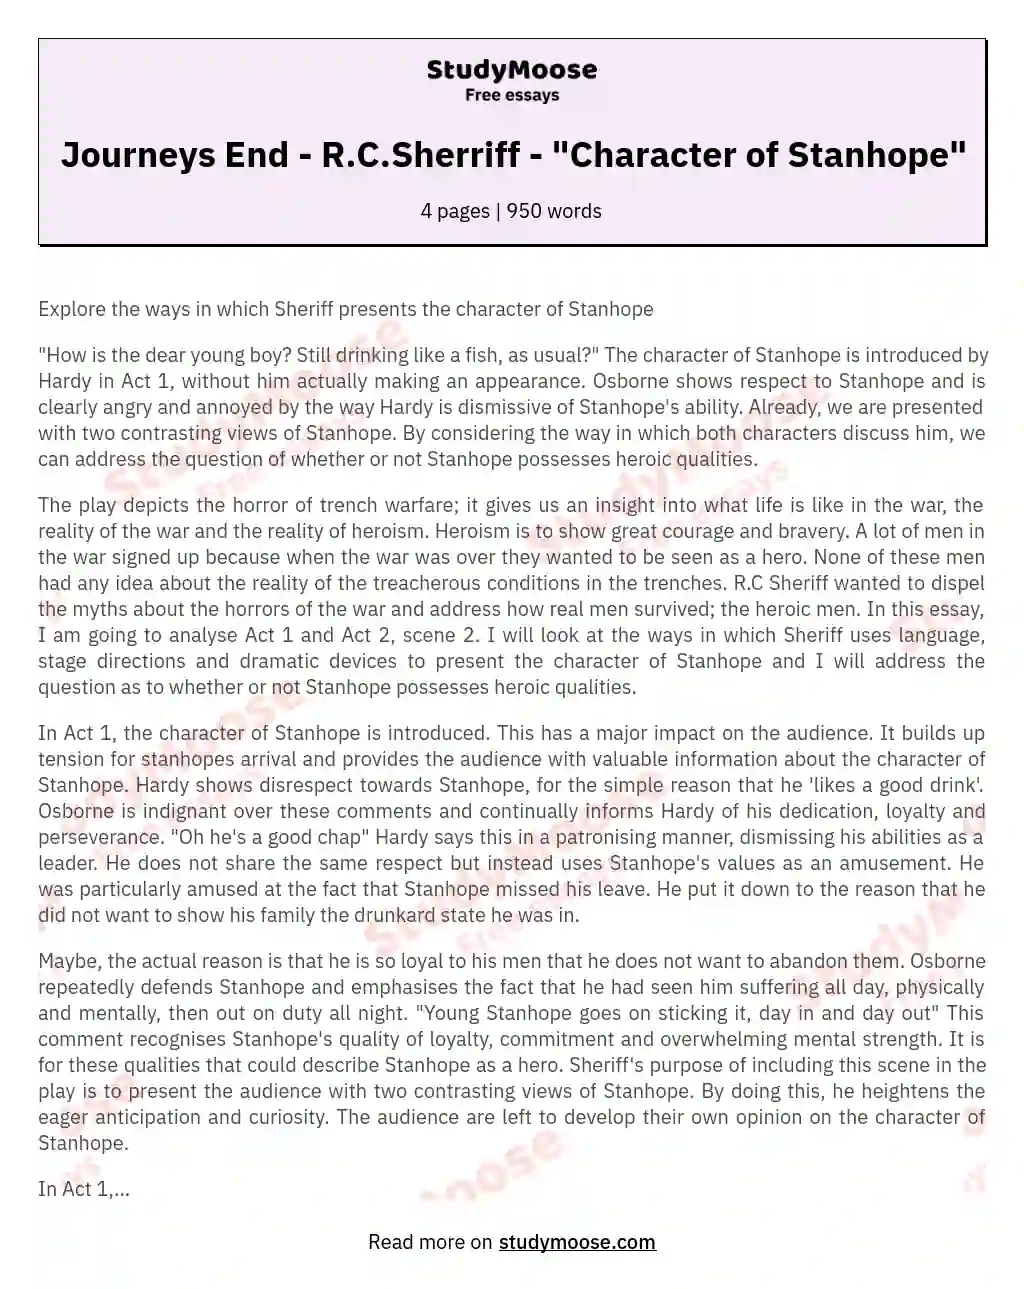 Journeys End - R.C.Sherriff - "Character of Stanhope" essay